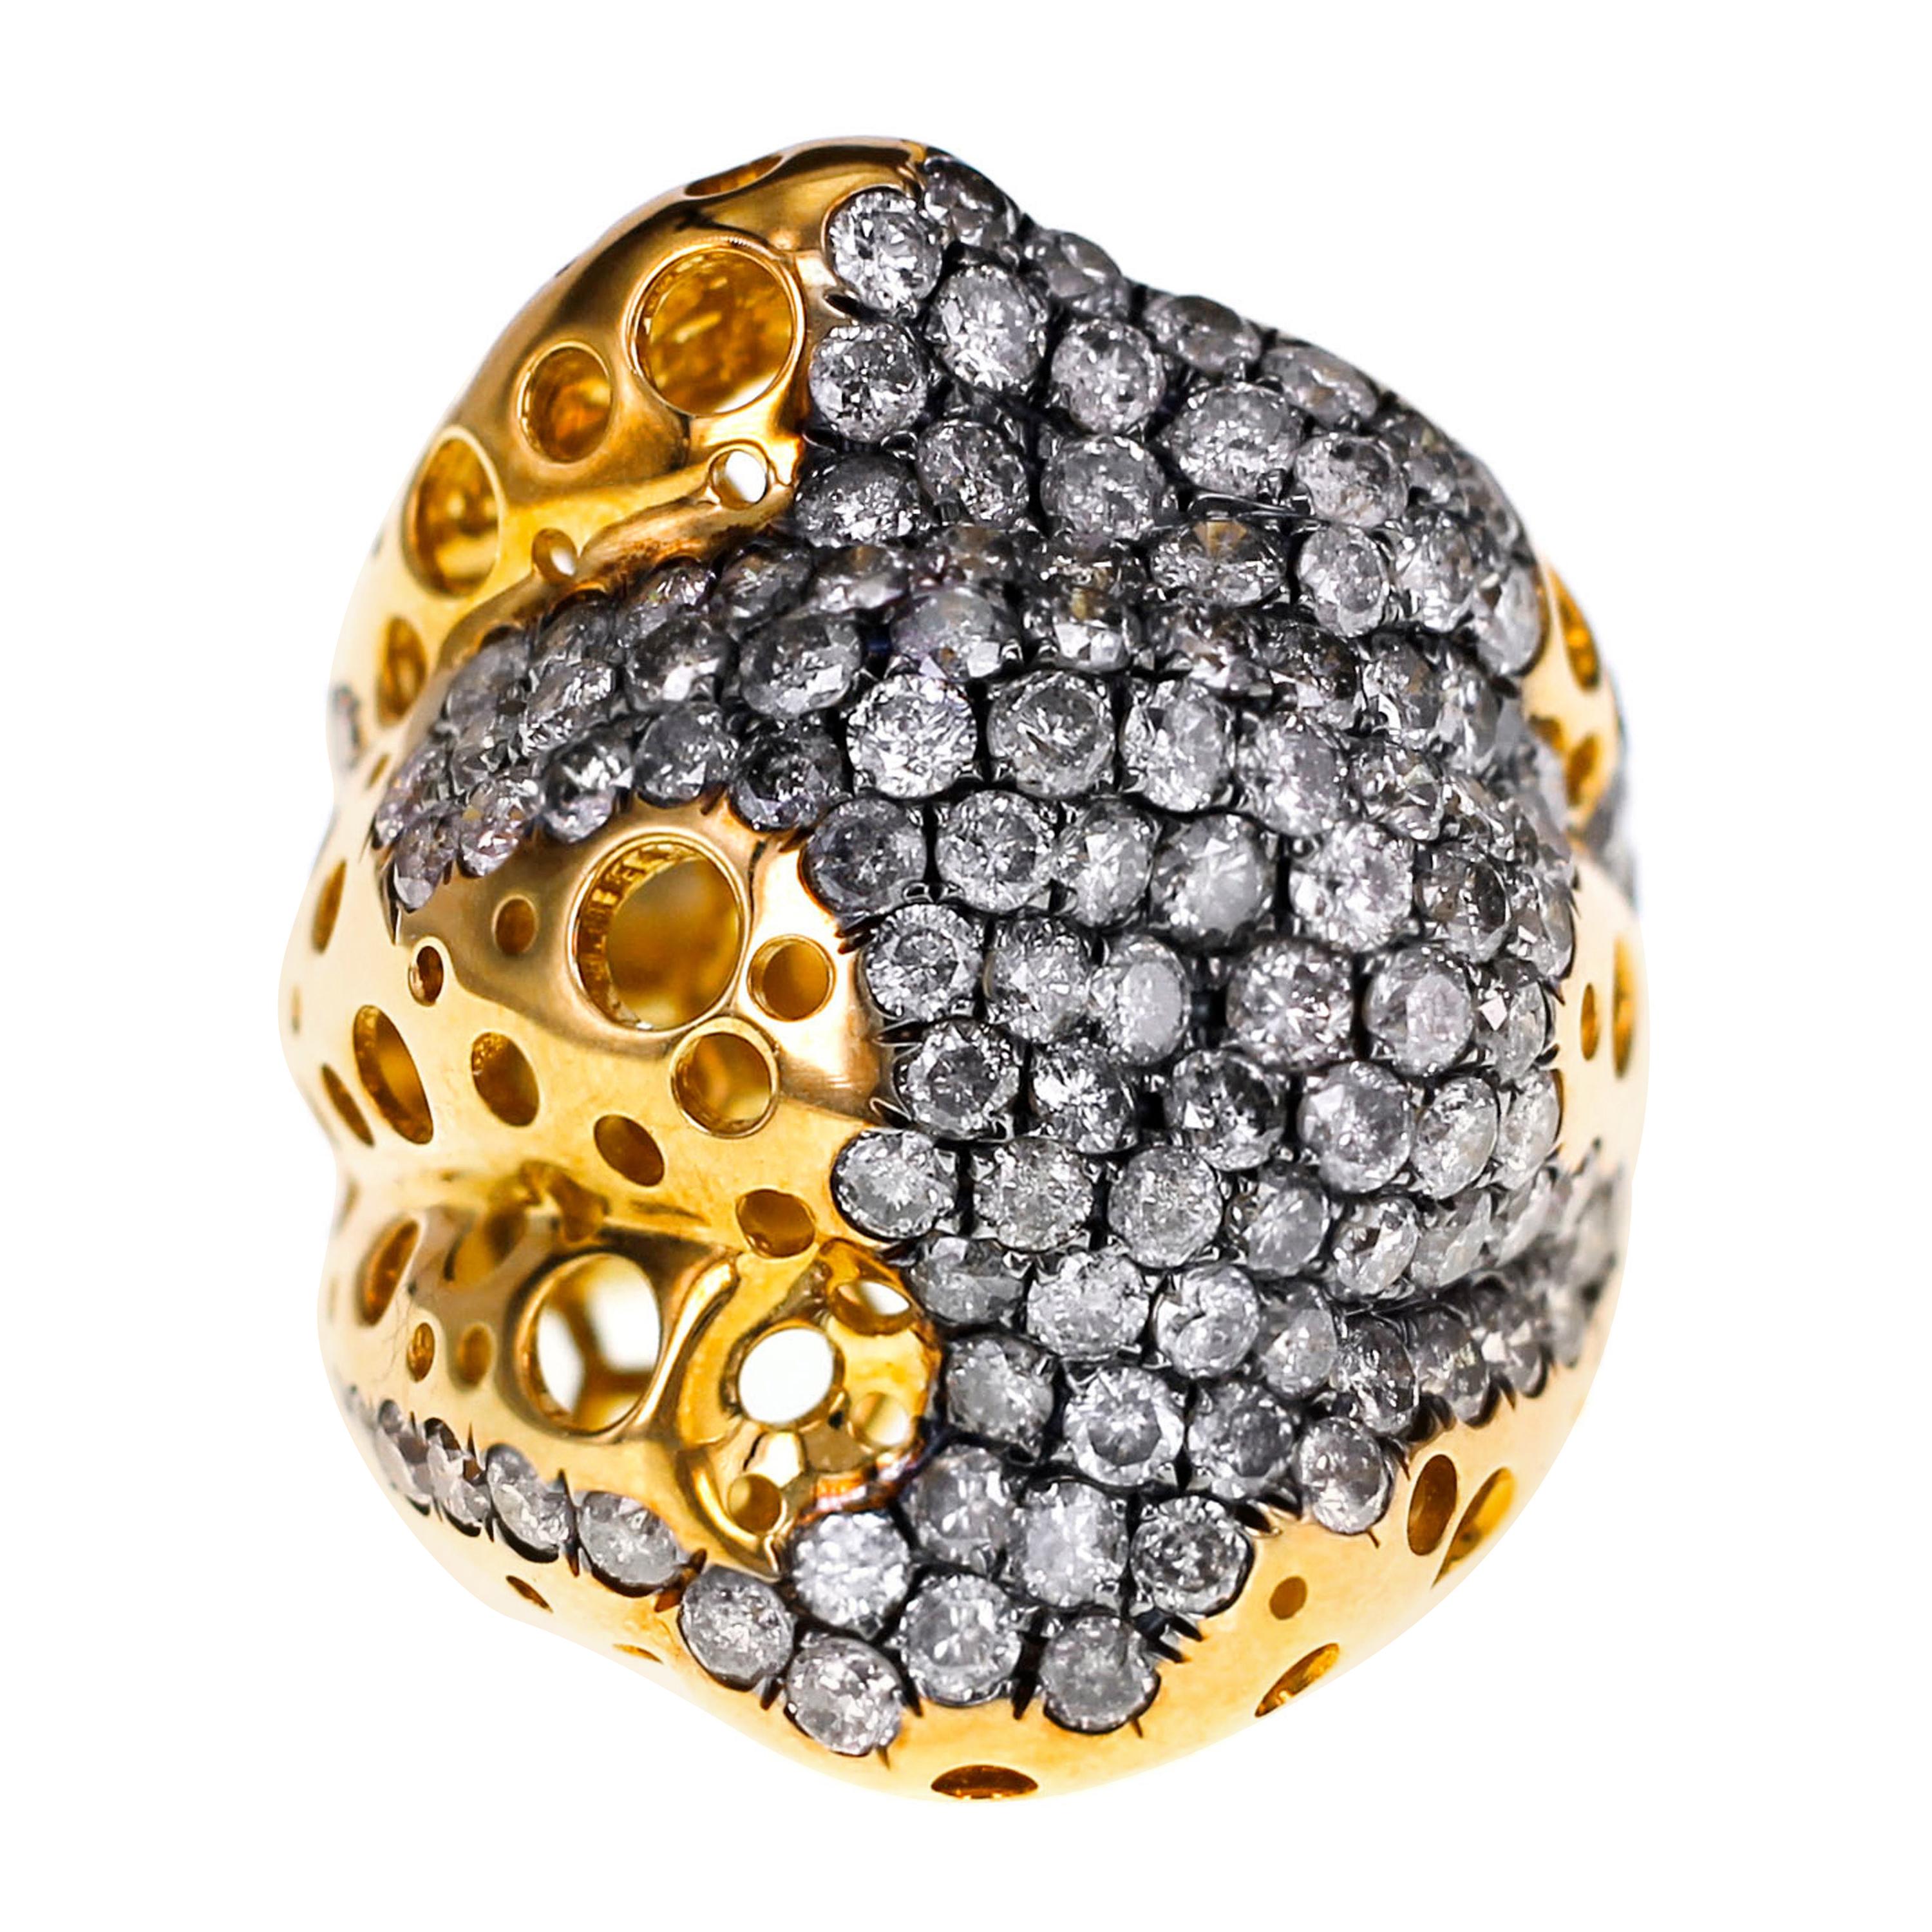 4.56 Carat Gray Diamond Set in a 22.87 Grams of 18 Karat Gold Dressy Ring